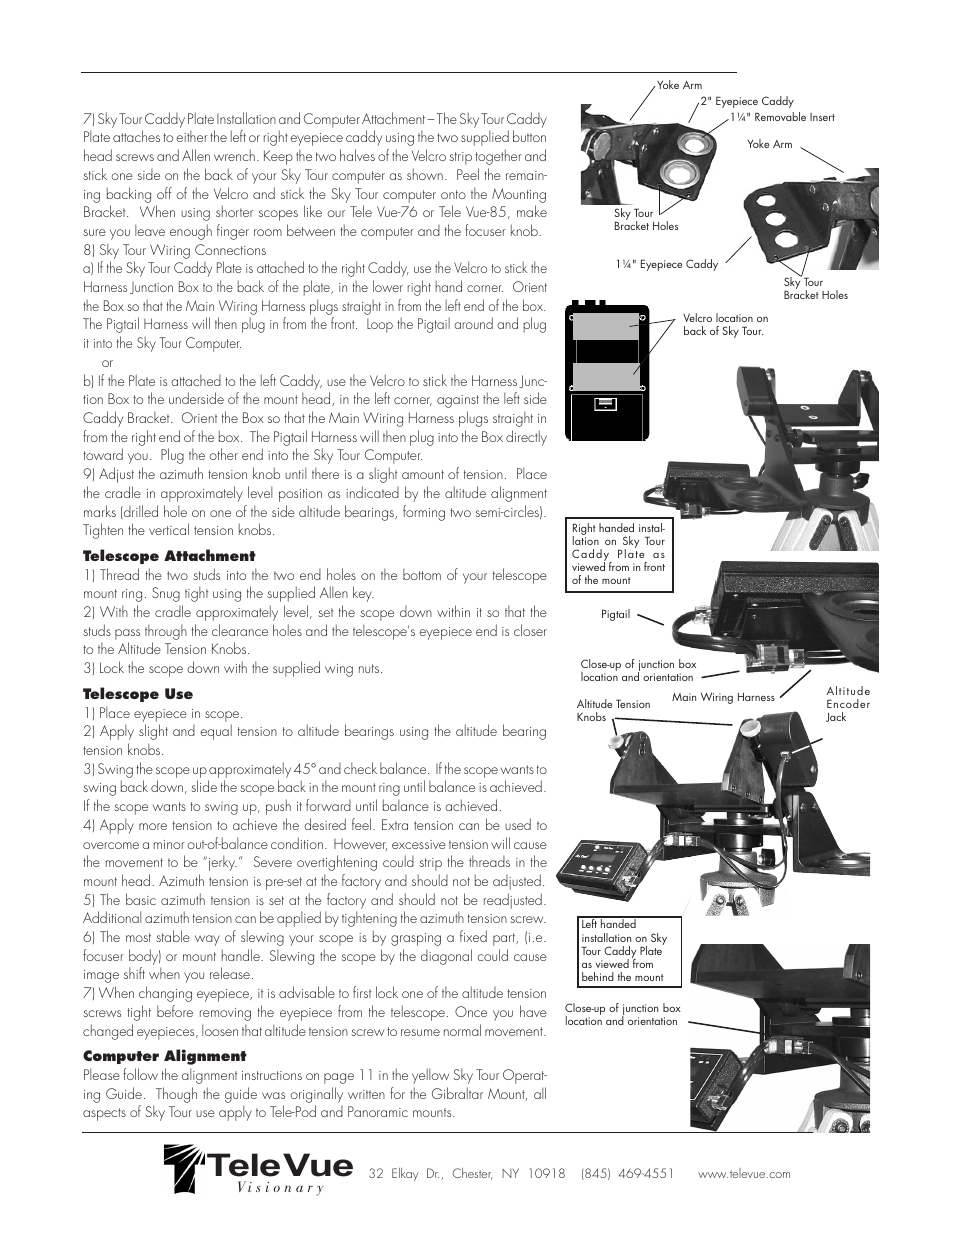 Tele vue | Tele Vue Tele-Pod Sky Tour User Manual | Page 2 / 2